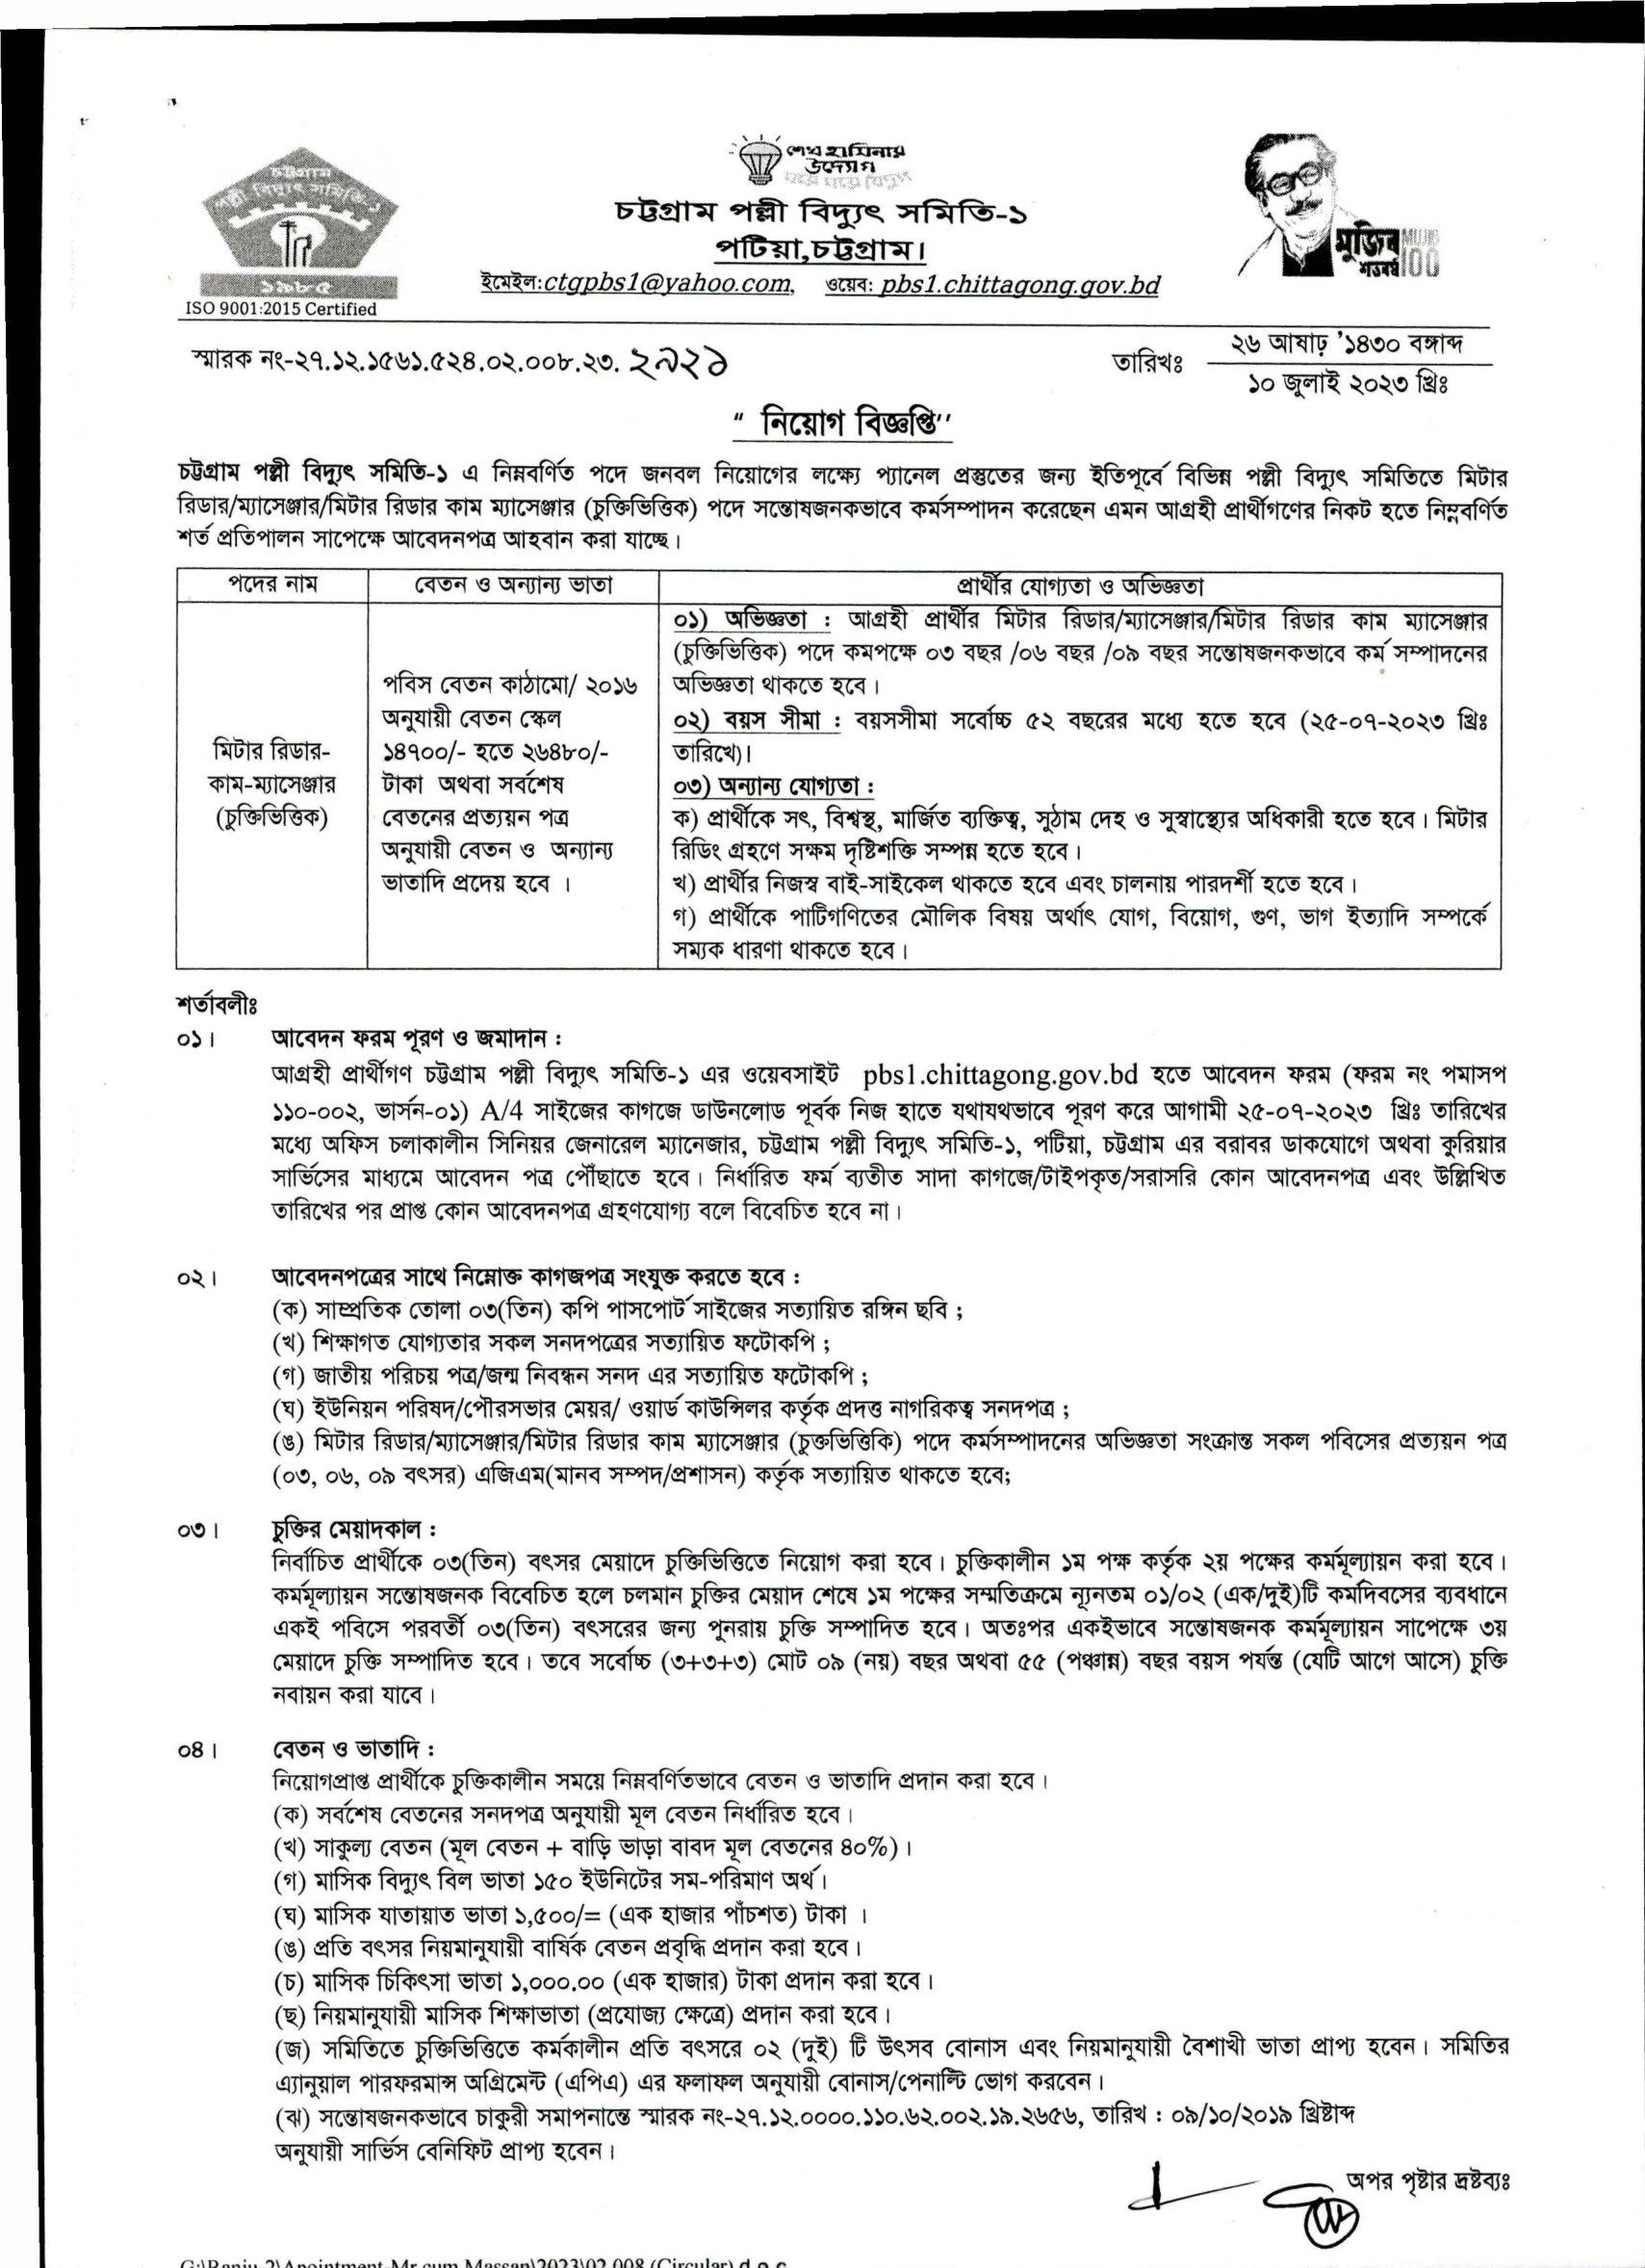 Chittagong biddut bd job circular 2023 - চট্টগ্রাম বিদ্যুৎ নিয়োগ ২০২৩ সার্কুলার - Bangladesh Rural Electrification Board BREB Job Circular 2023 - sorkari chakrir khobor 2023 - সরকারি চাকরির সার্কুলার ২০২৩ - govt job circular 2023